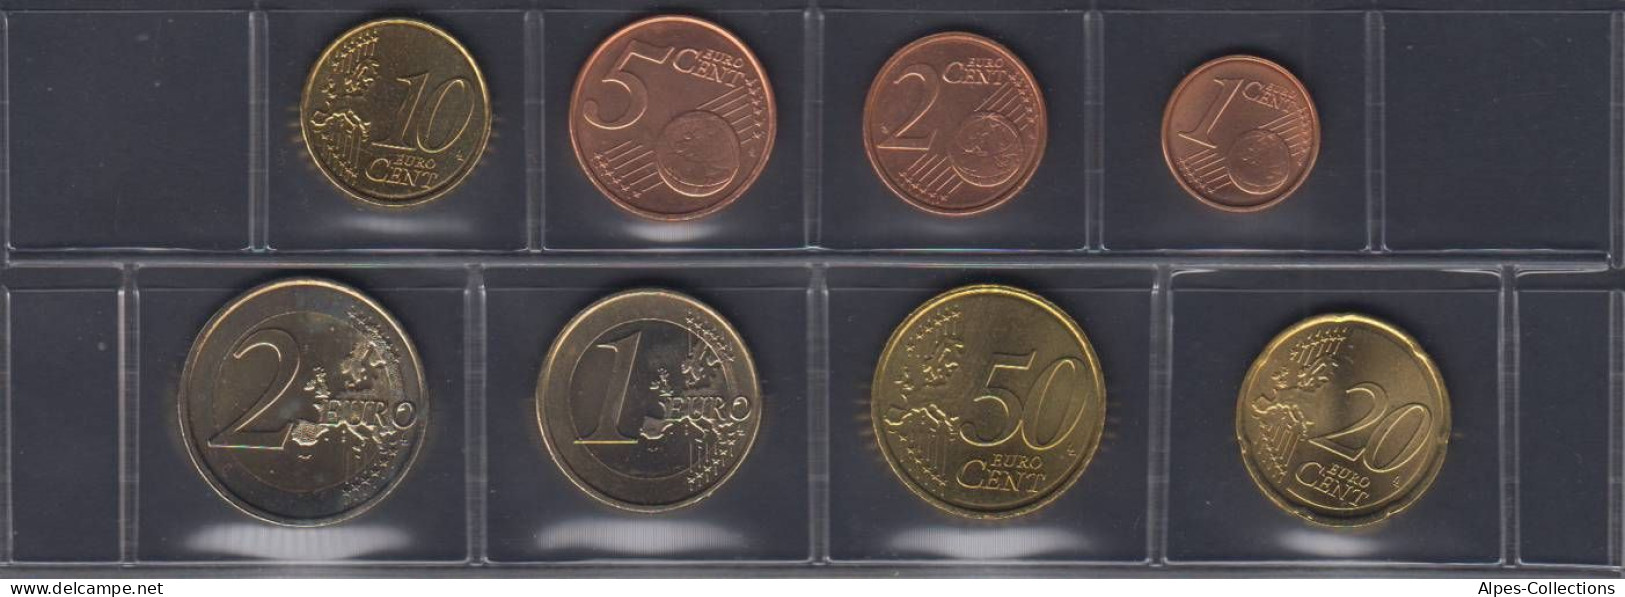 PBX2008.3 - SERIE PAYS-BAS - 2008 - 1 Cent à 2 Euros - Pays-Bas